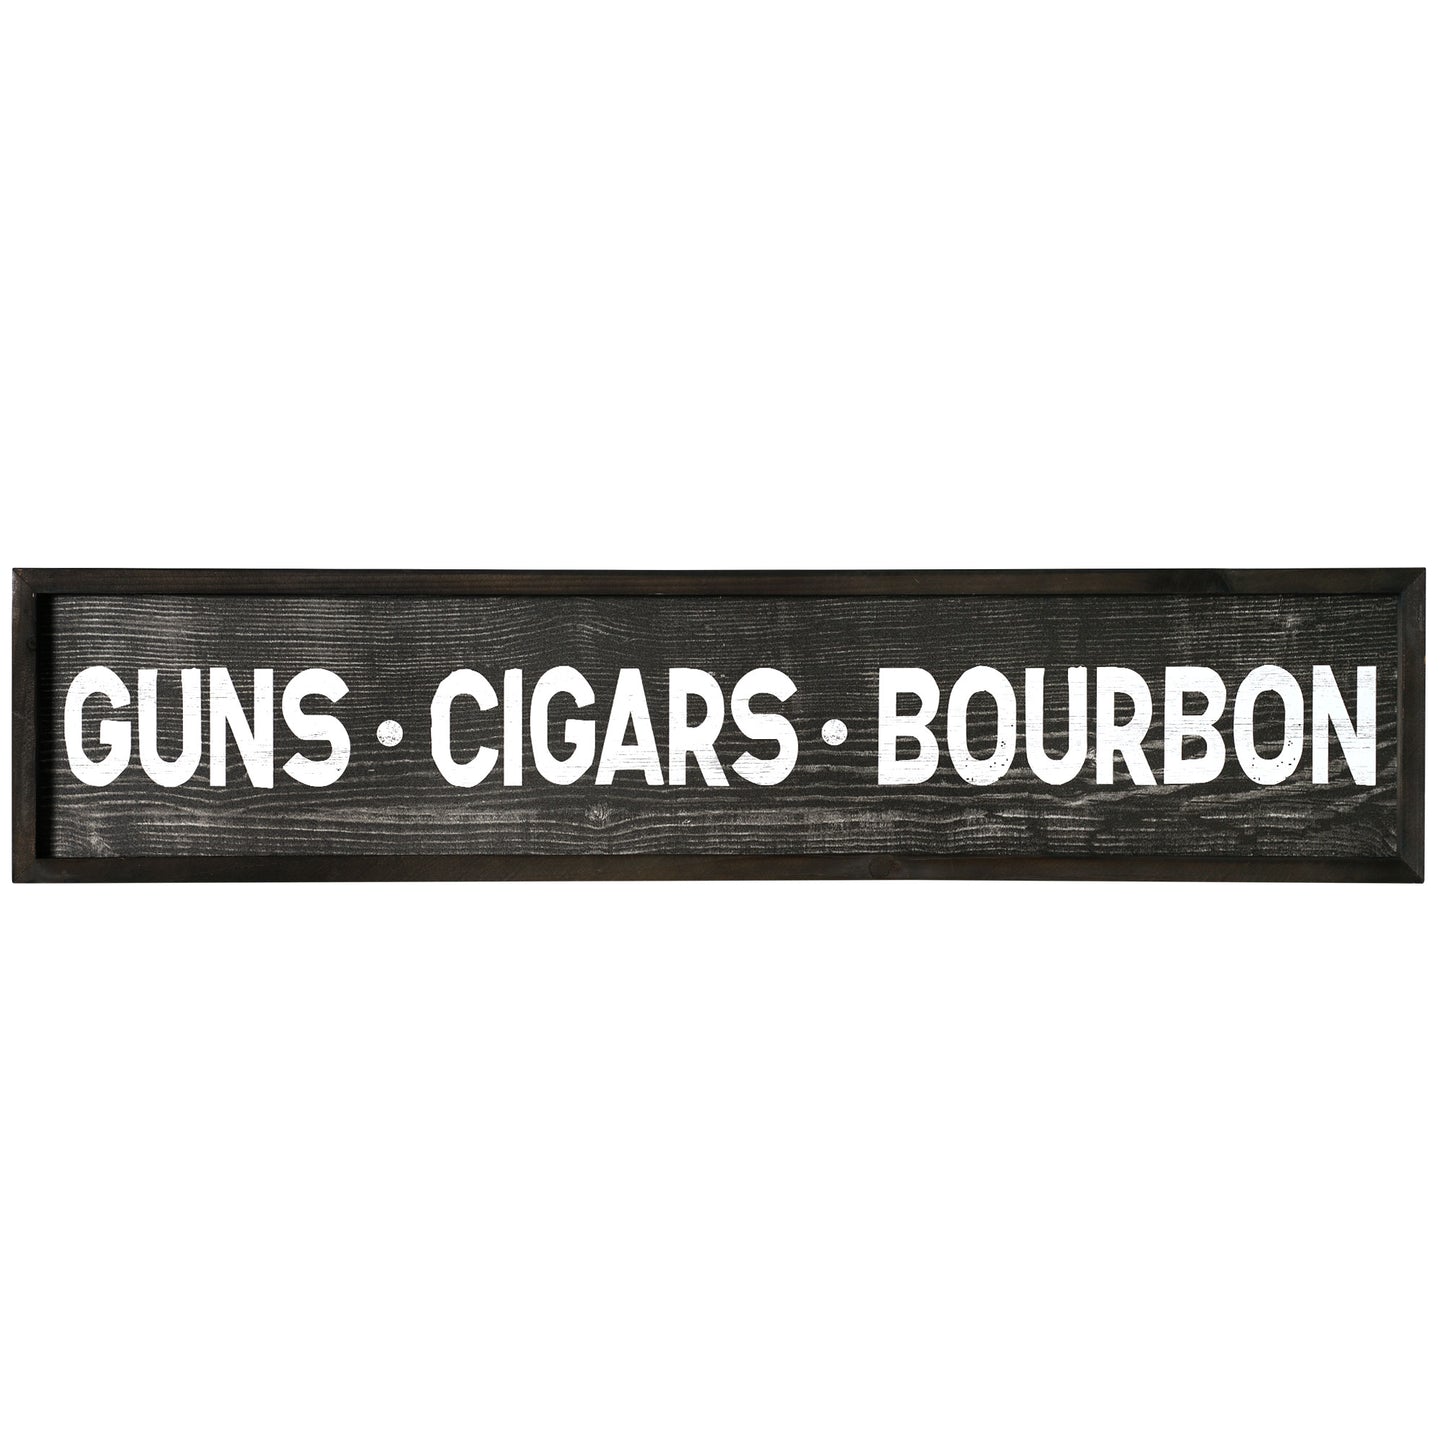 Guns, Cigars, Bourbon Wood Novelty Wall Sign - 36" x 8"